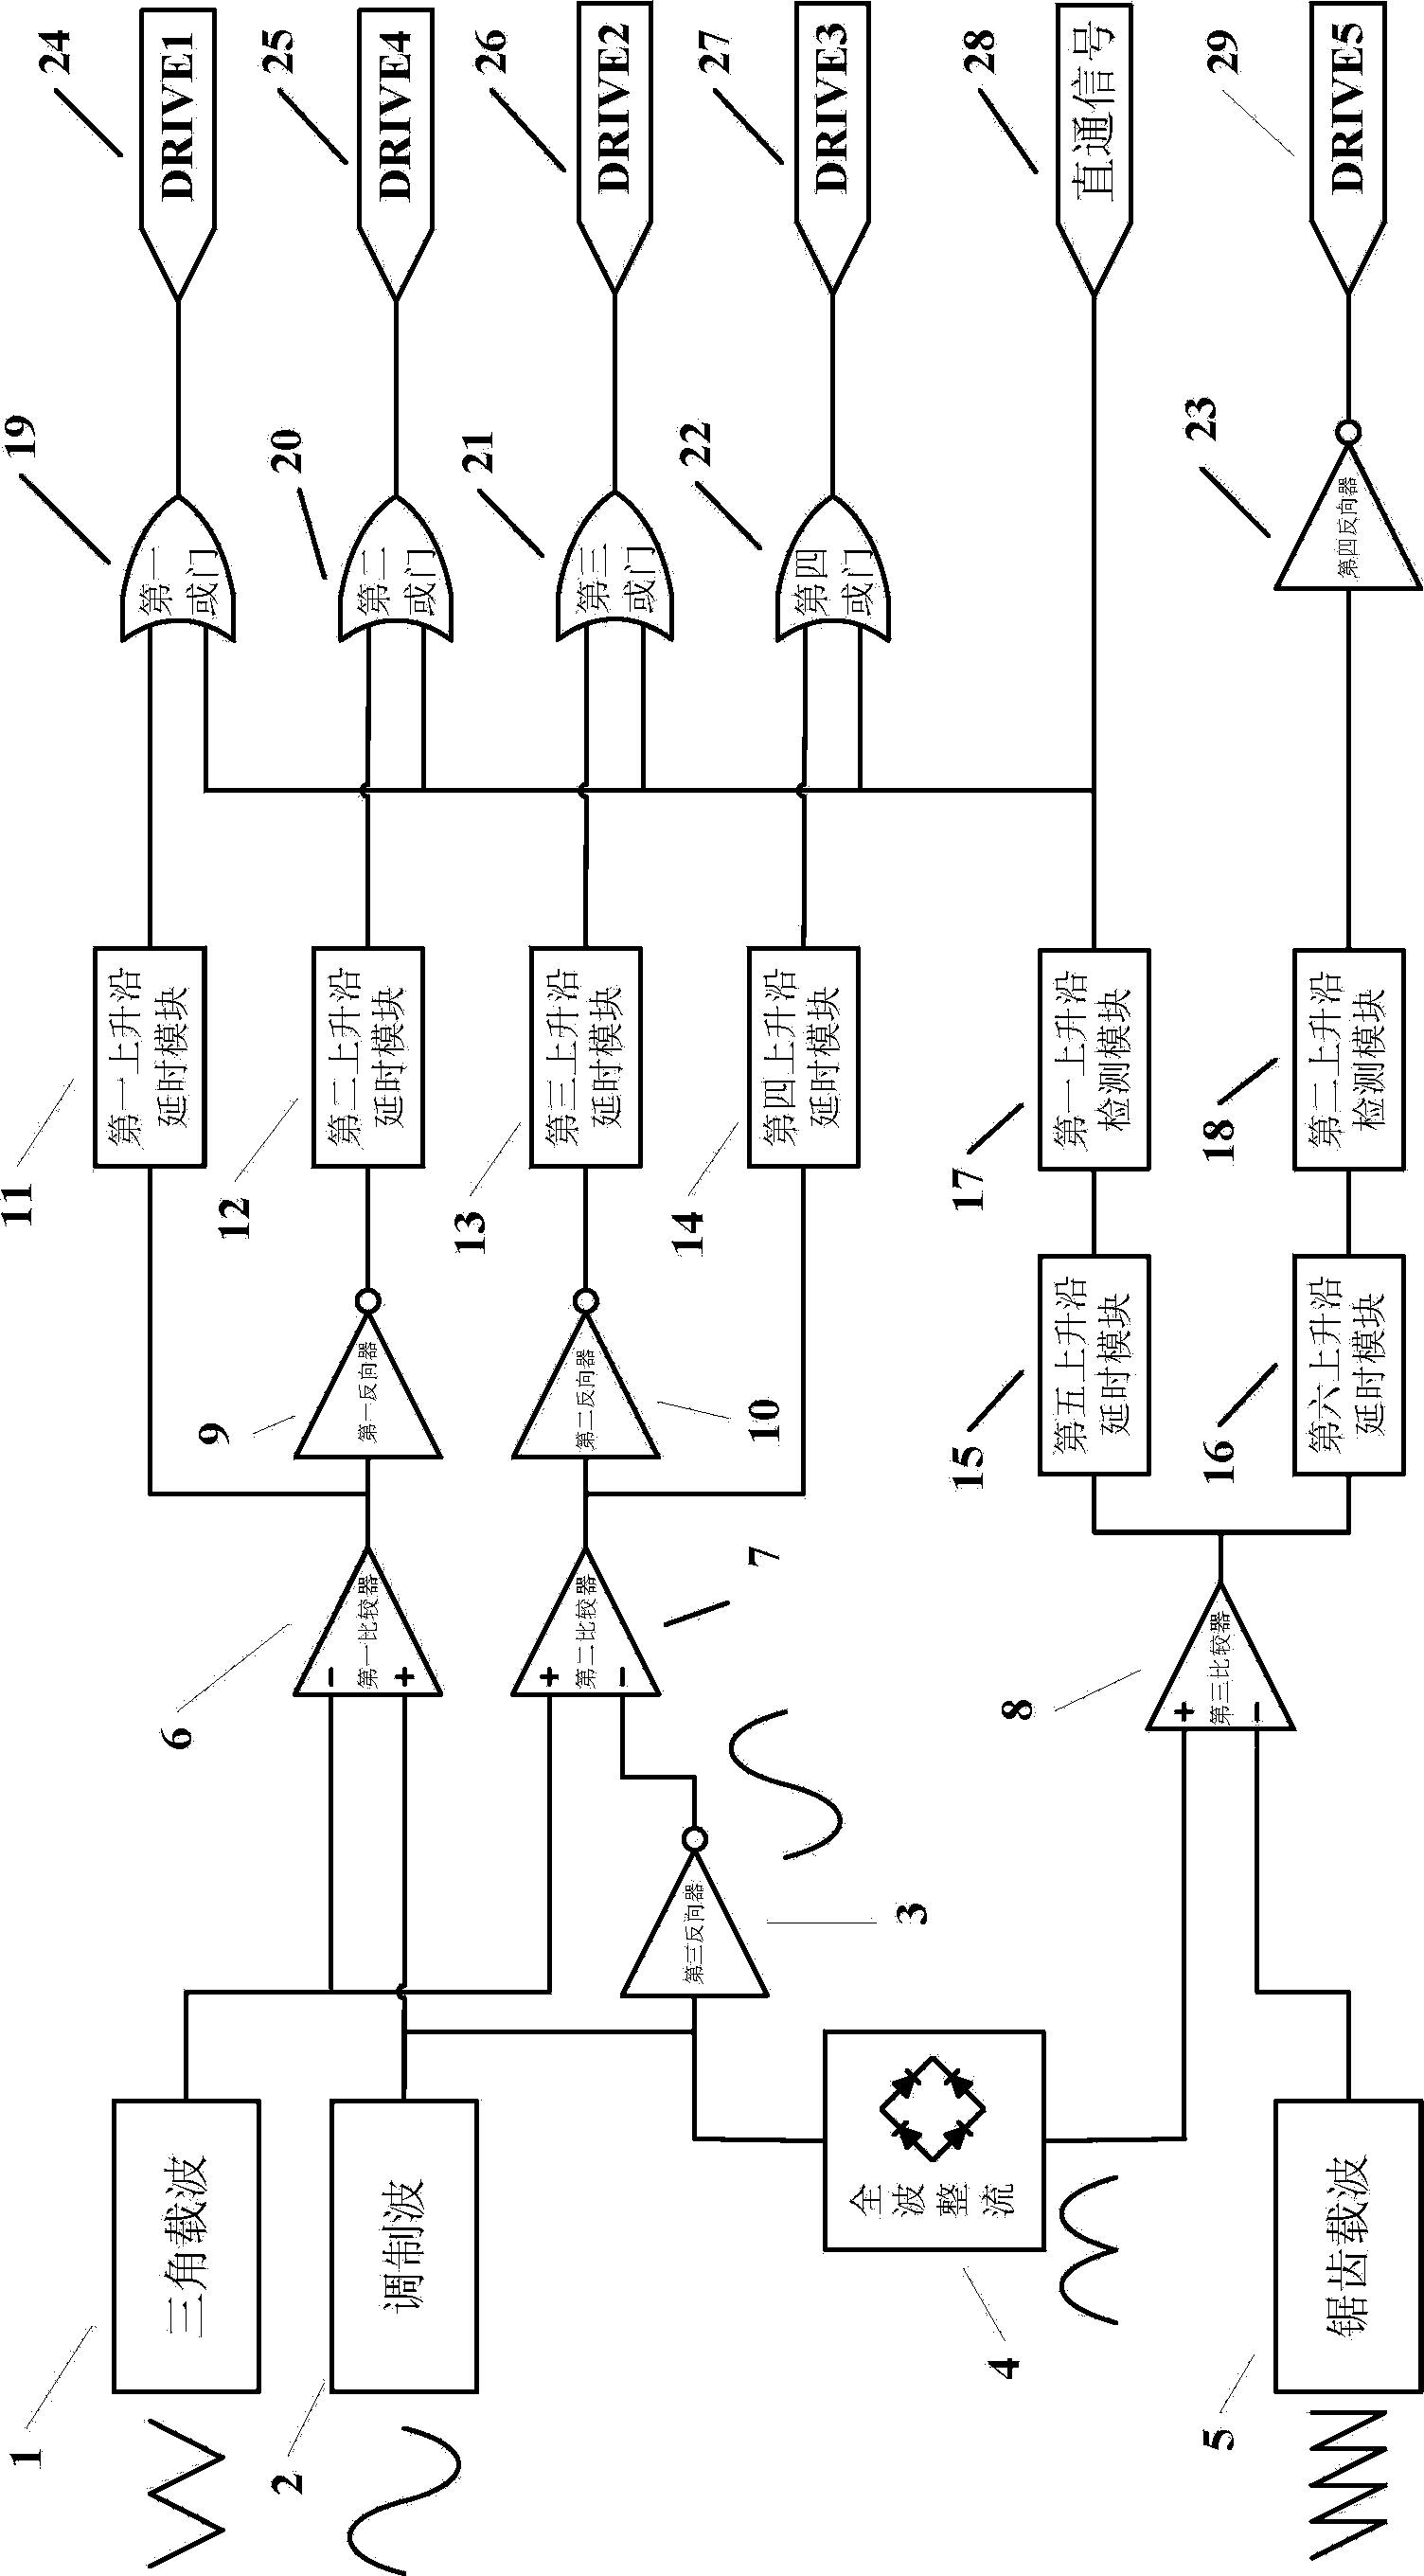 One-phase inverter modulation method